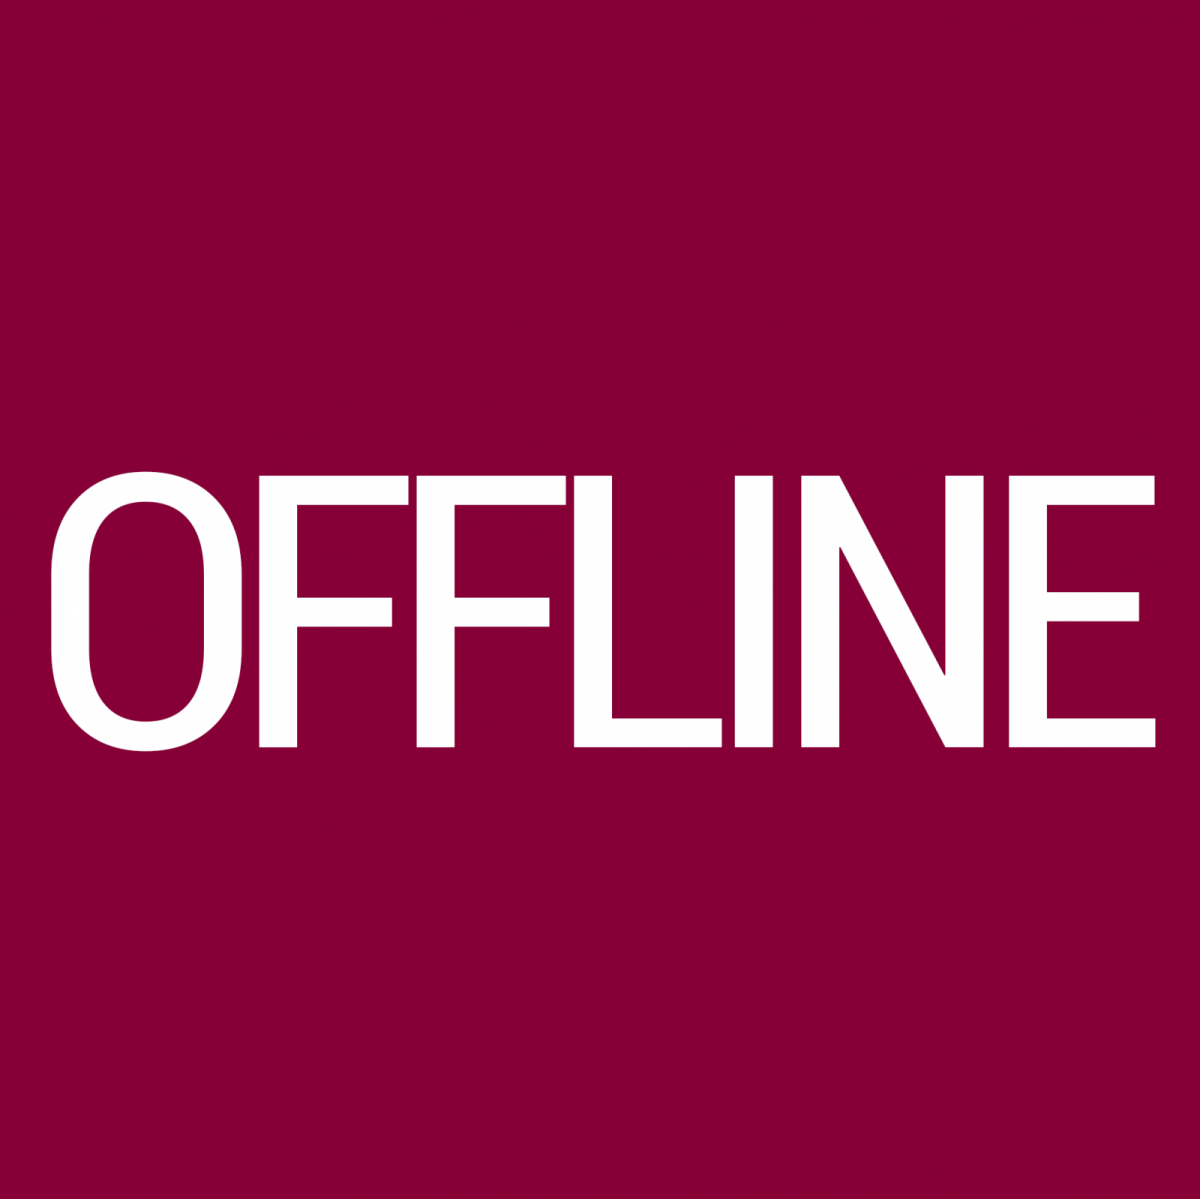 Offline got. Офлайн. Логотип offline. Надпись оффлайн. Offline логотип офлайн.